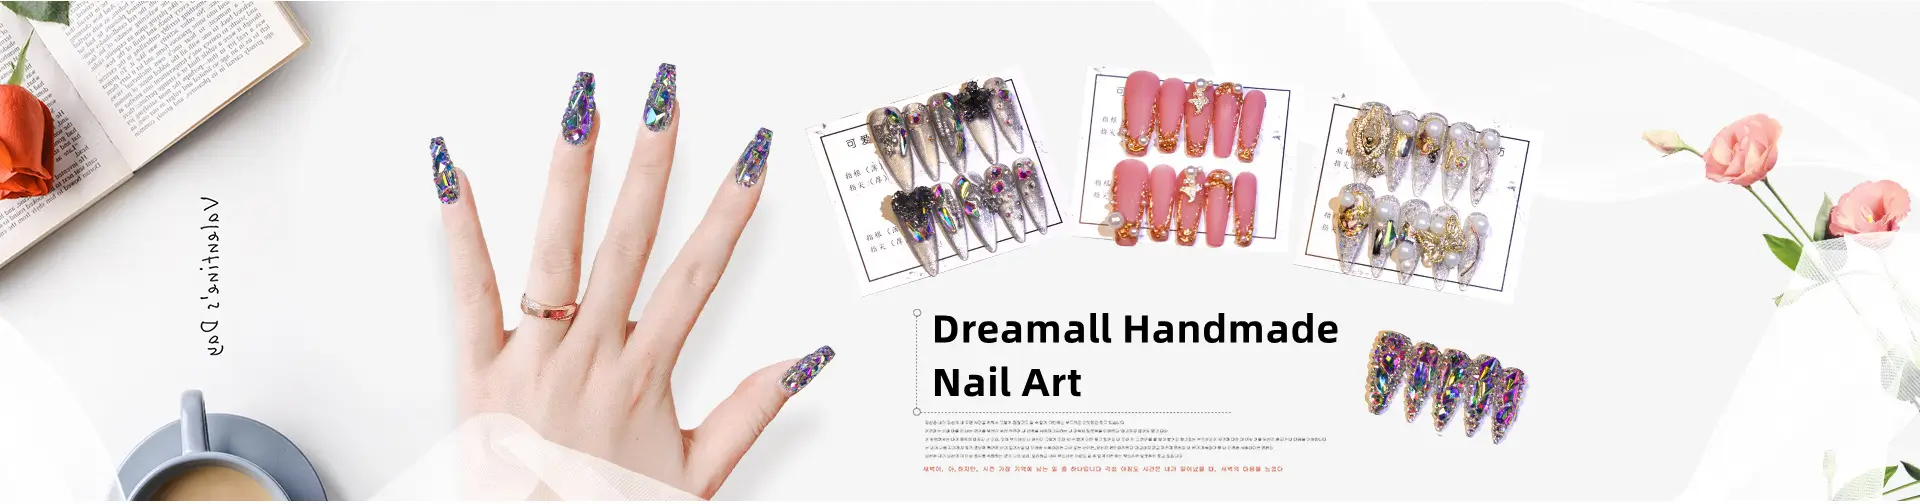 custom press on nails - Dreamall